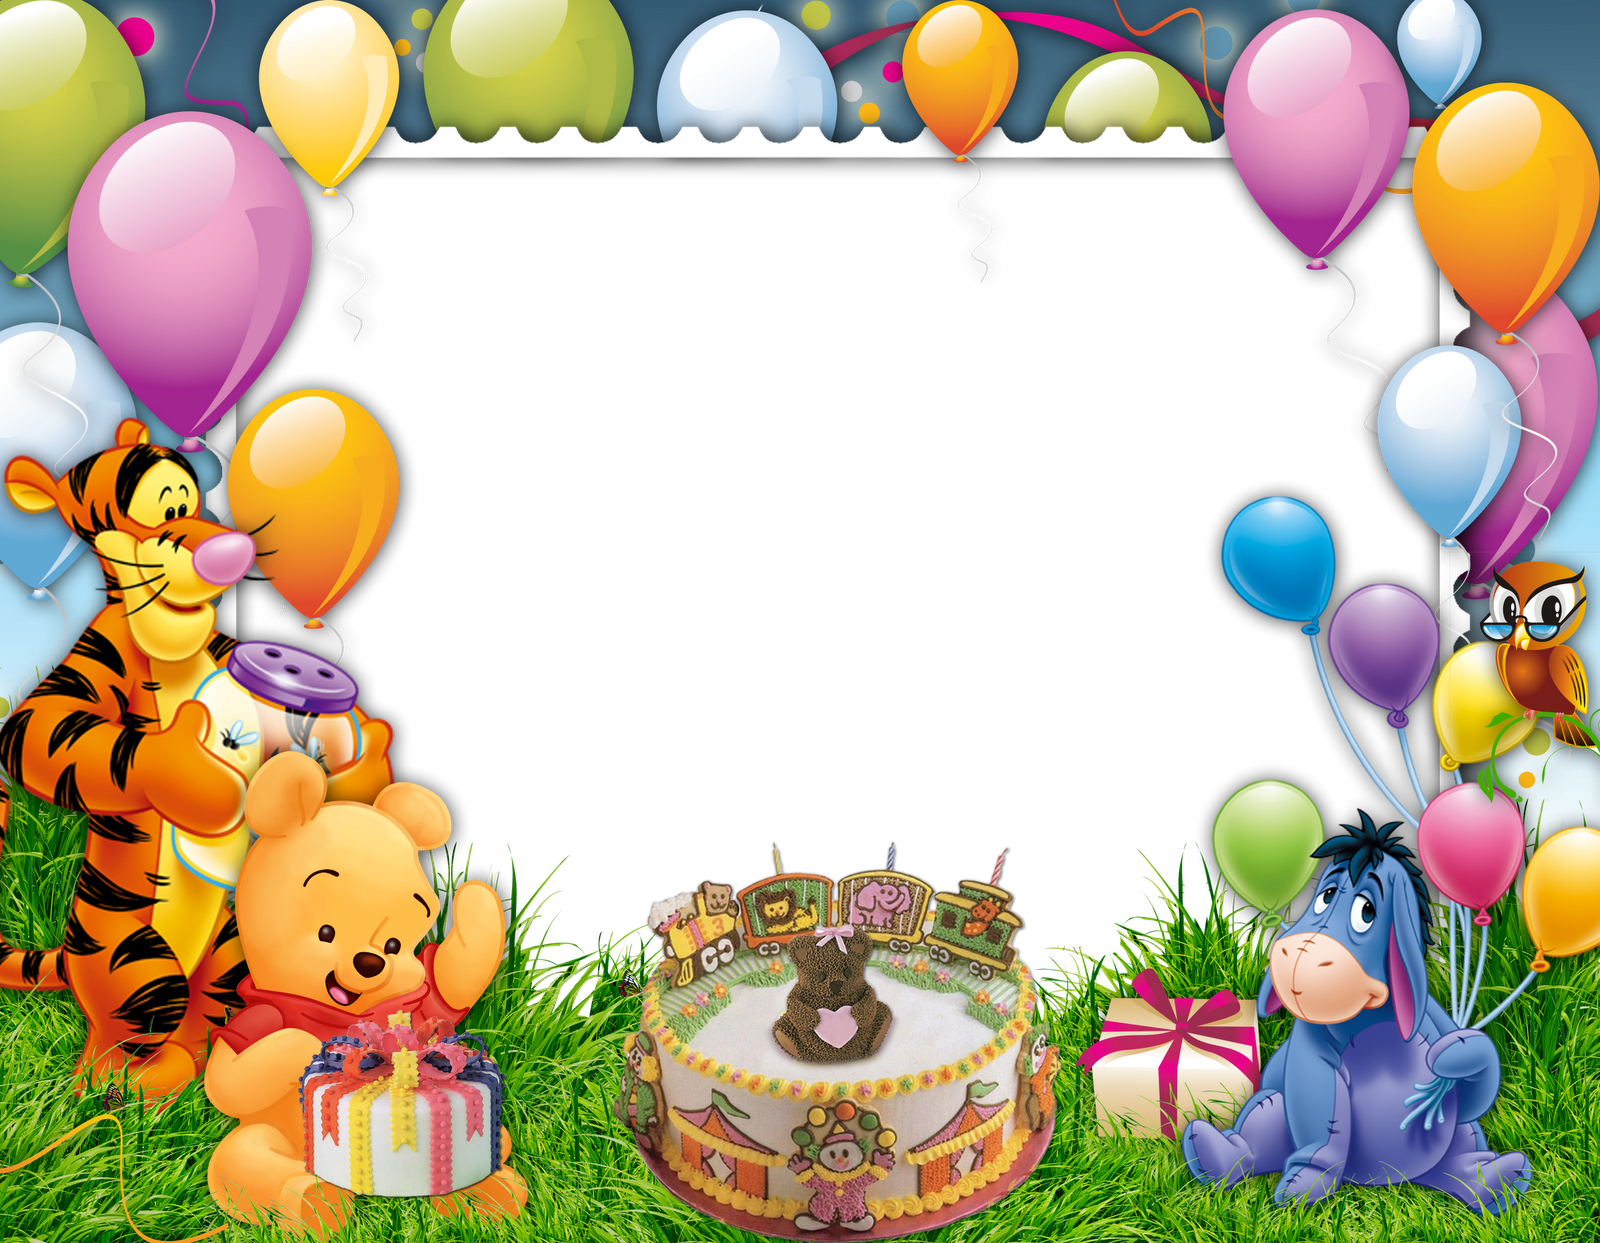 Balloons Birthday Frame Free PNG Image